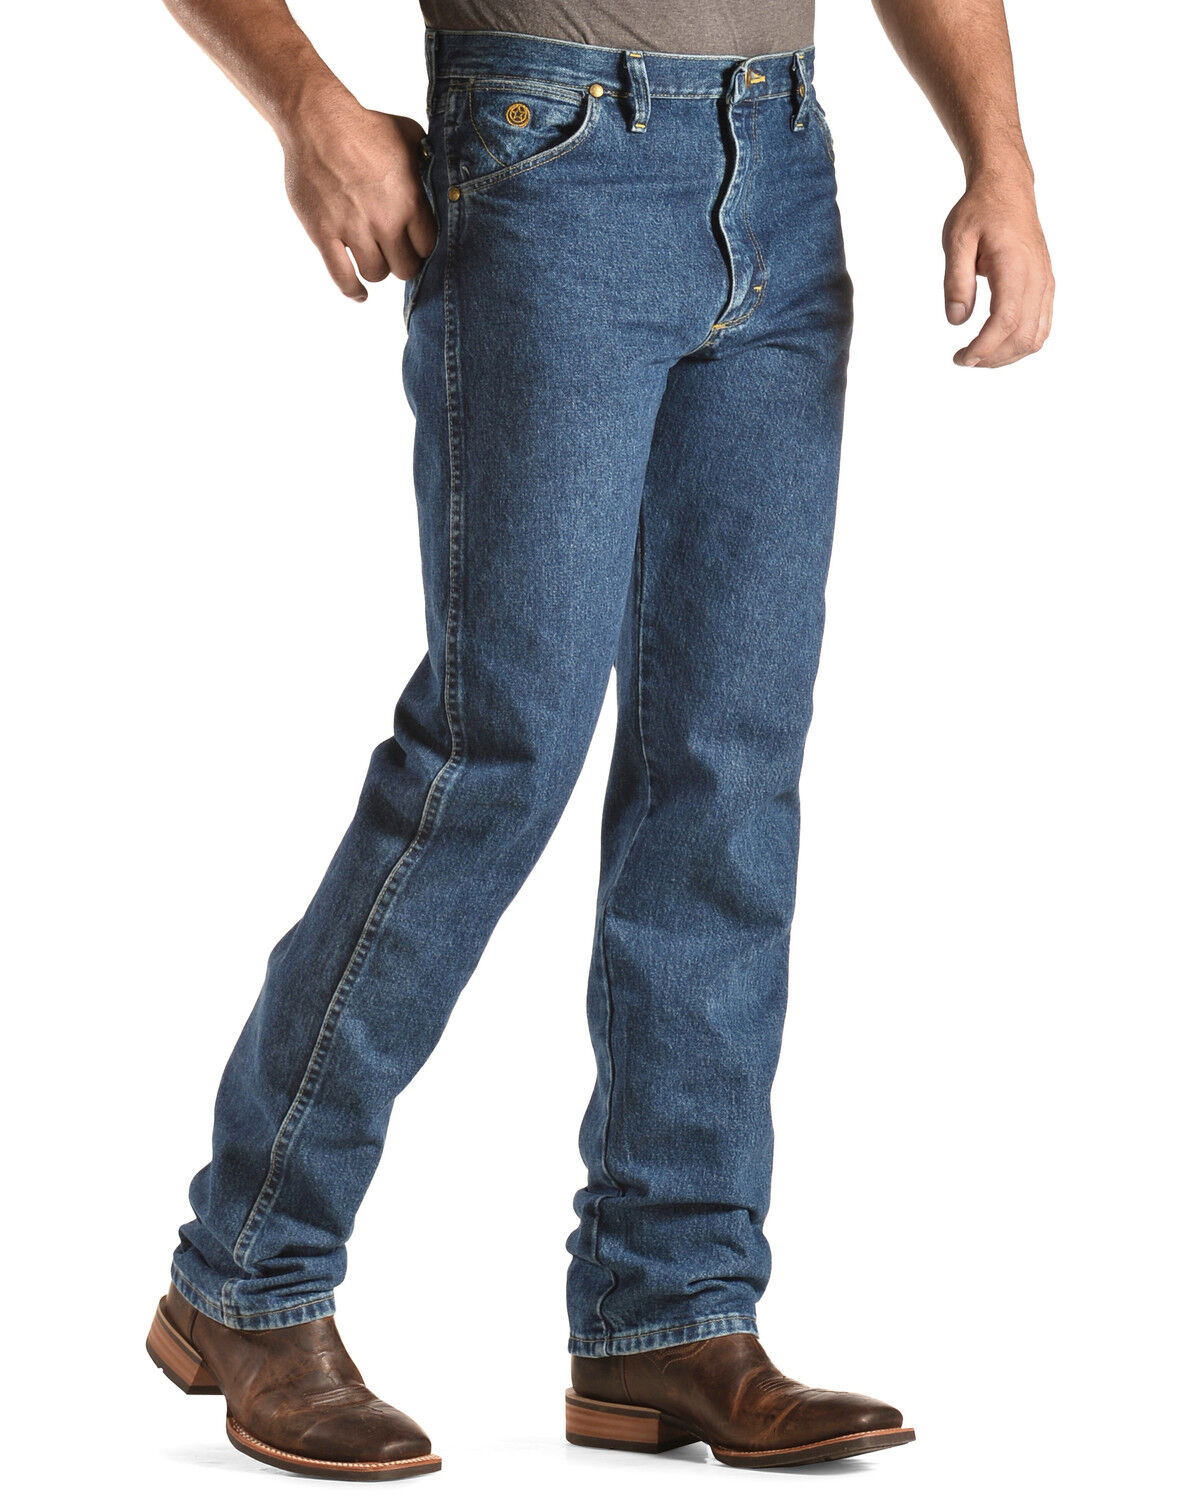 Wrangler Boys Original Cowboy Cut George Strait Jeans 